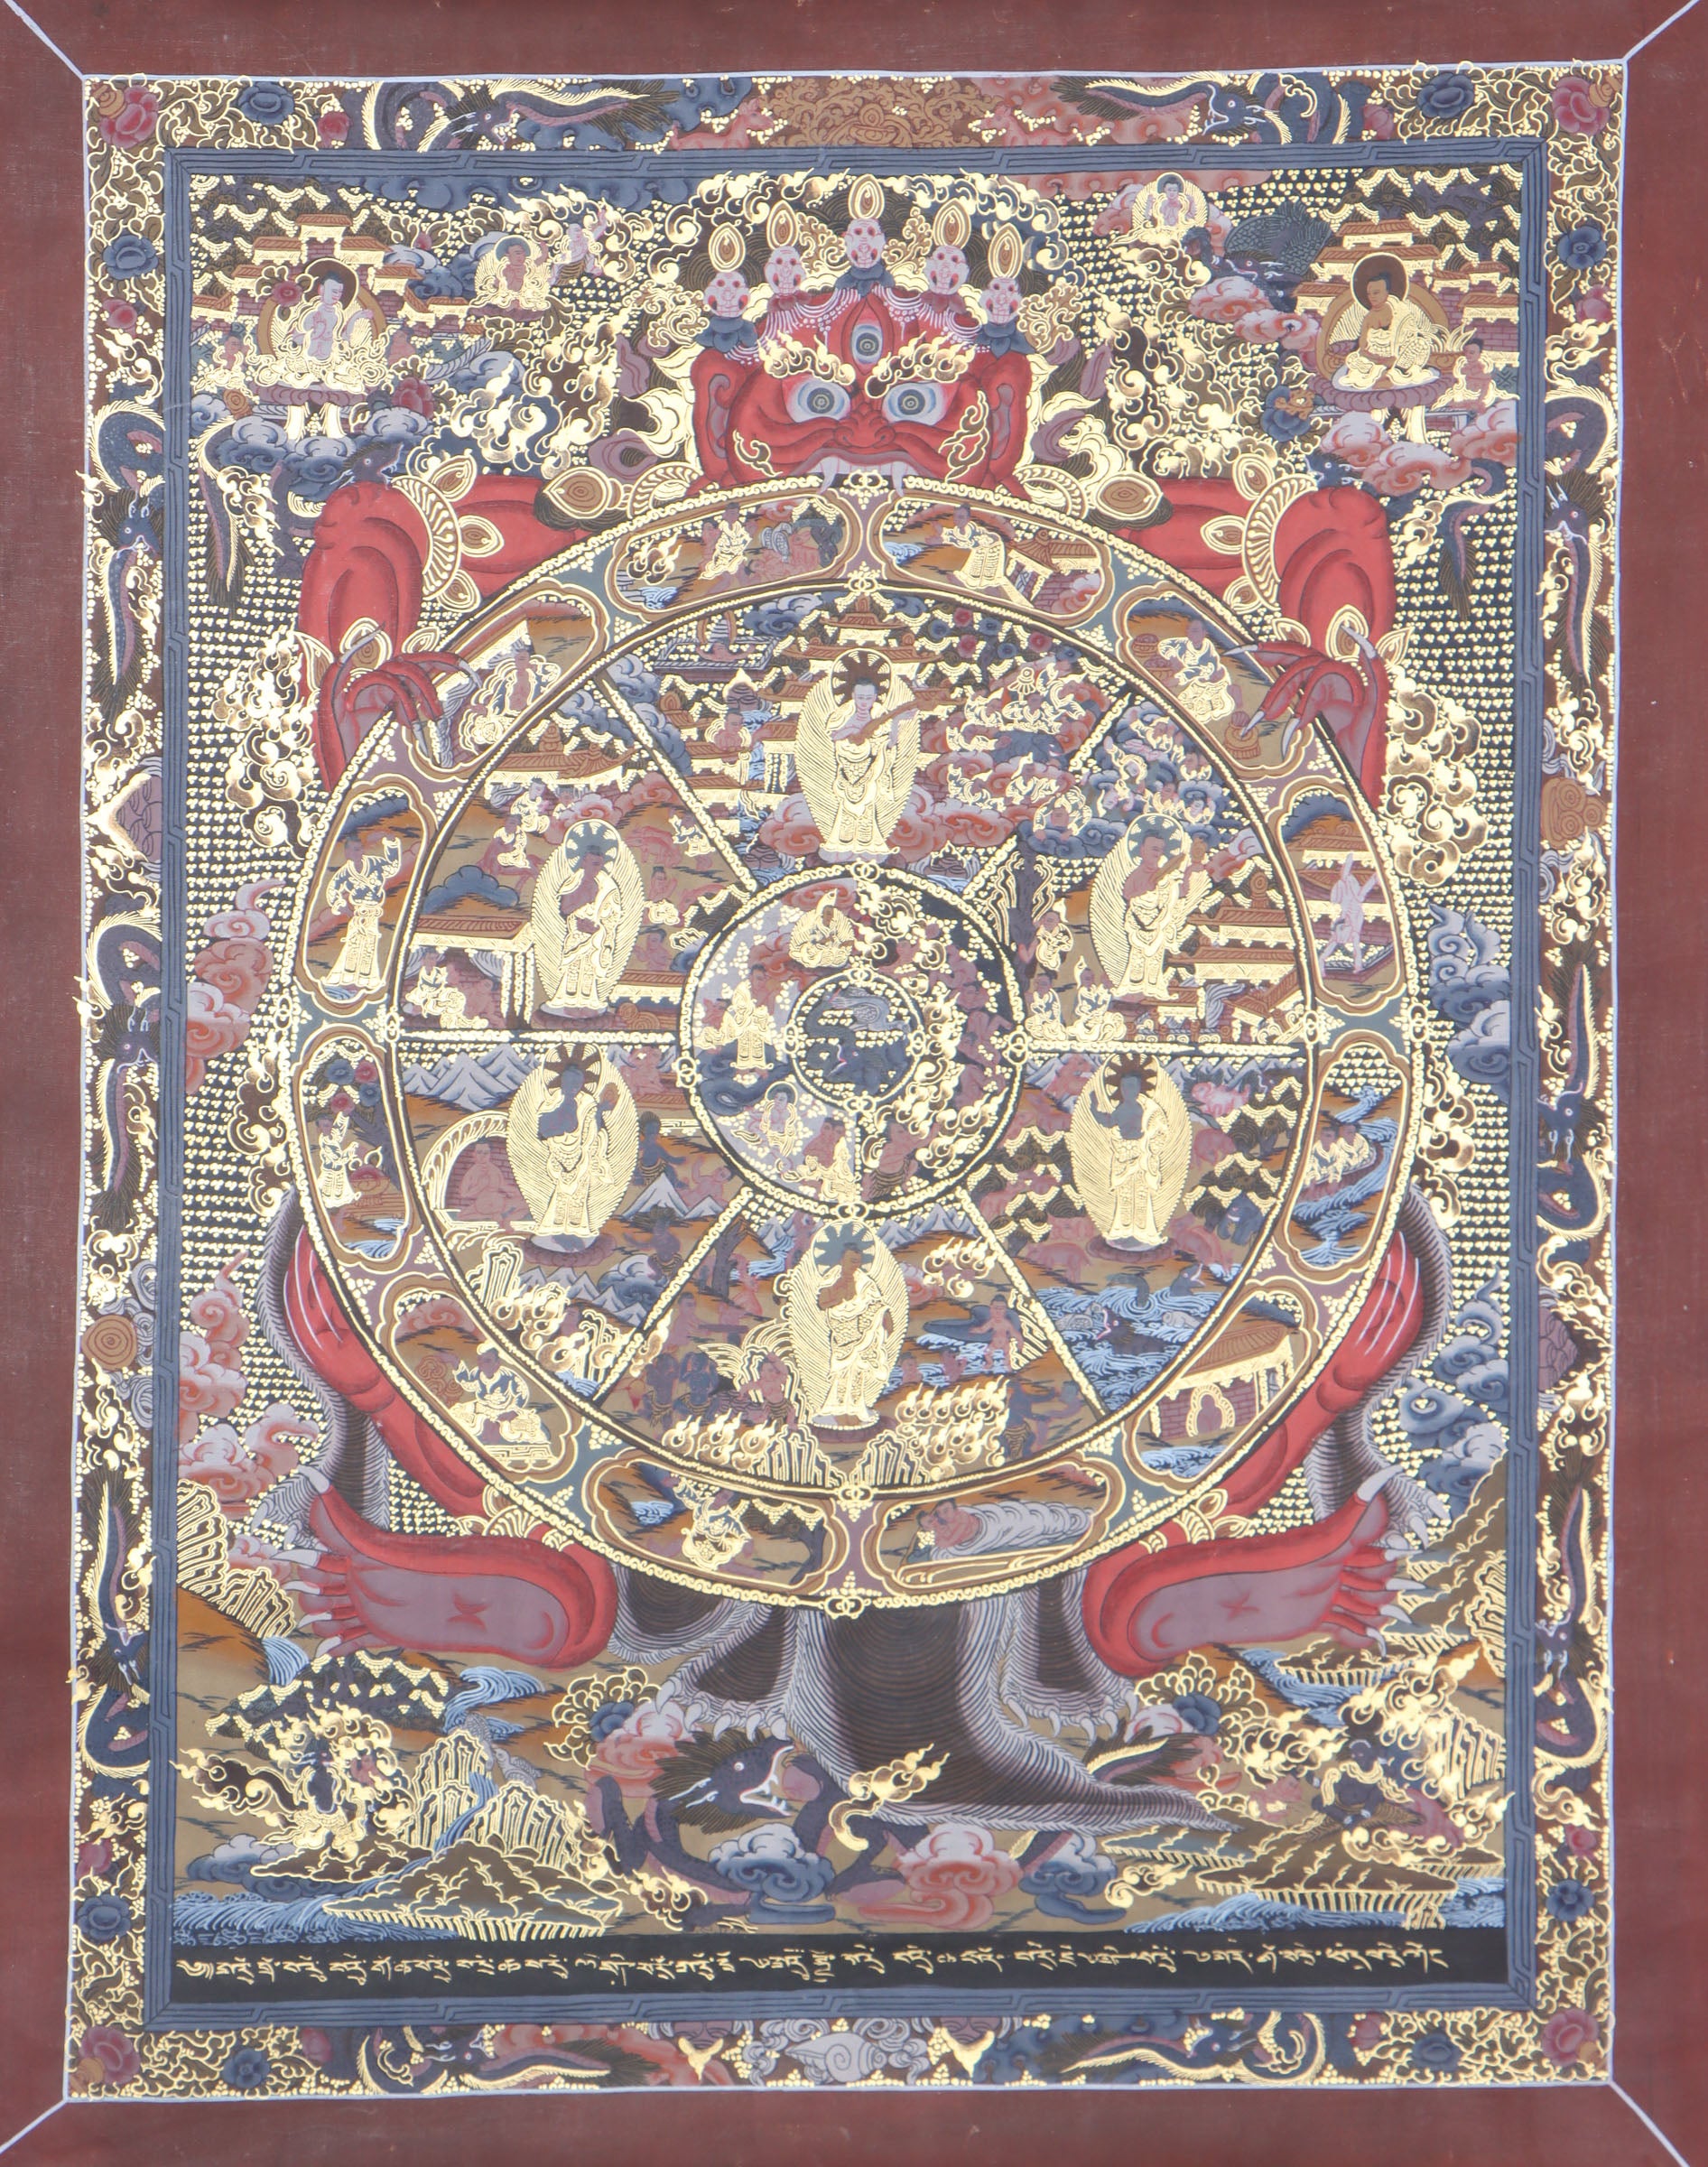 The Wheel of Life thangka illuminates Buddhism's suffering, impermanence, and liberation.